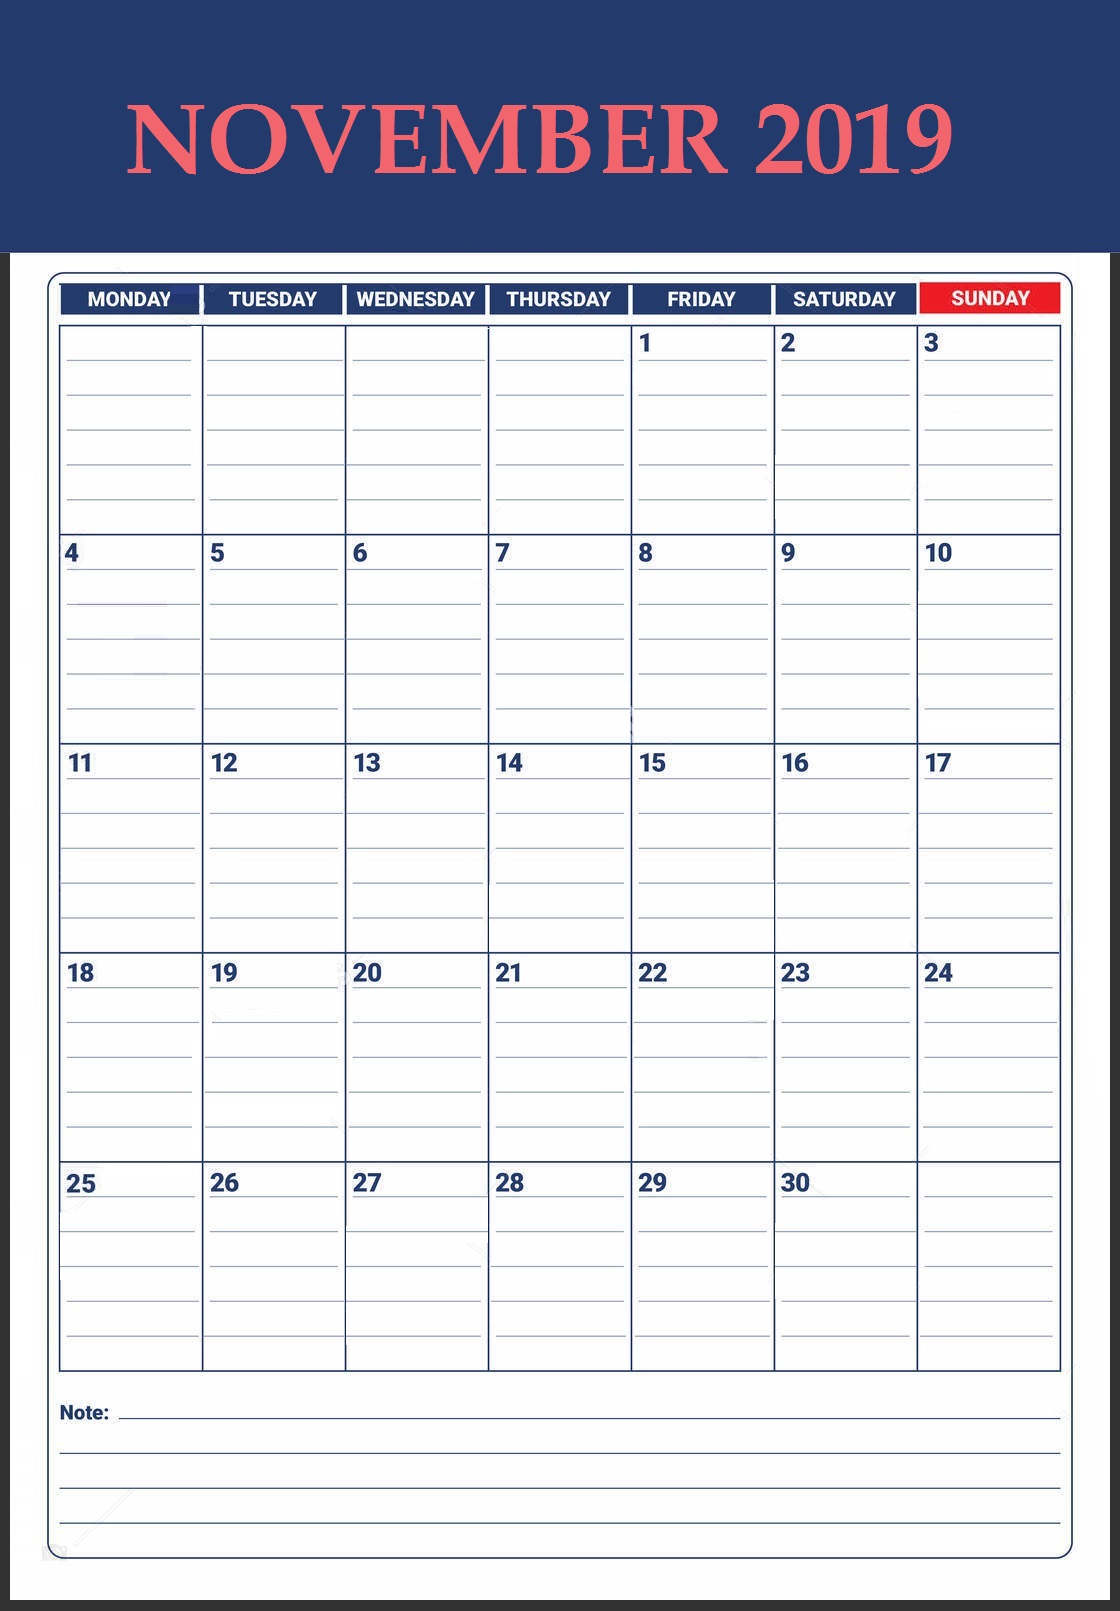 November 2019 Office Table Calendar